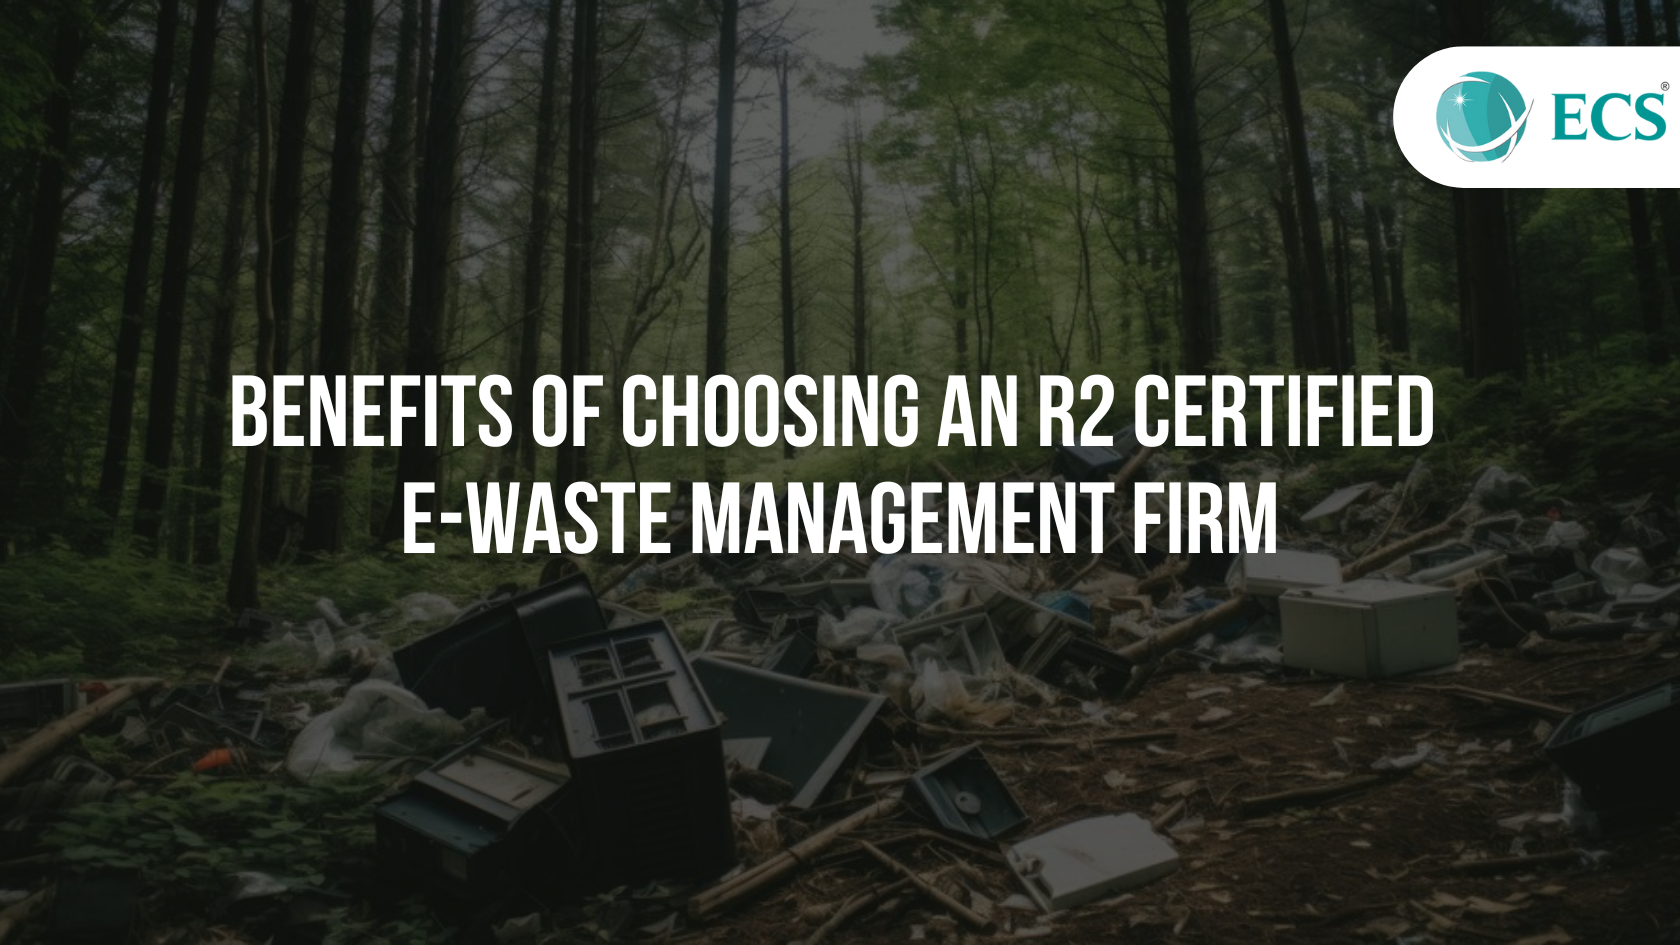 Top 5 Benefits of Choosing an R2 Certified E-Waste Management Firm